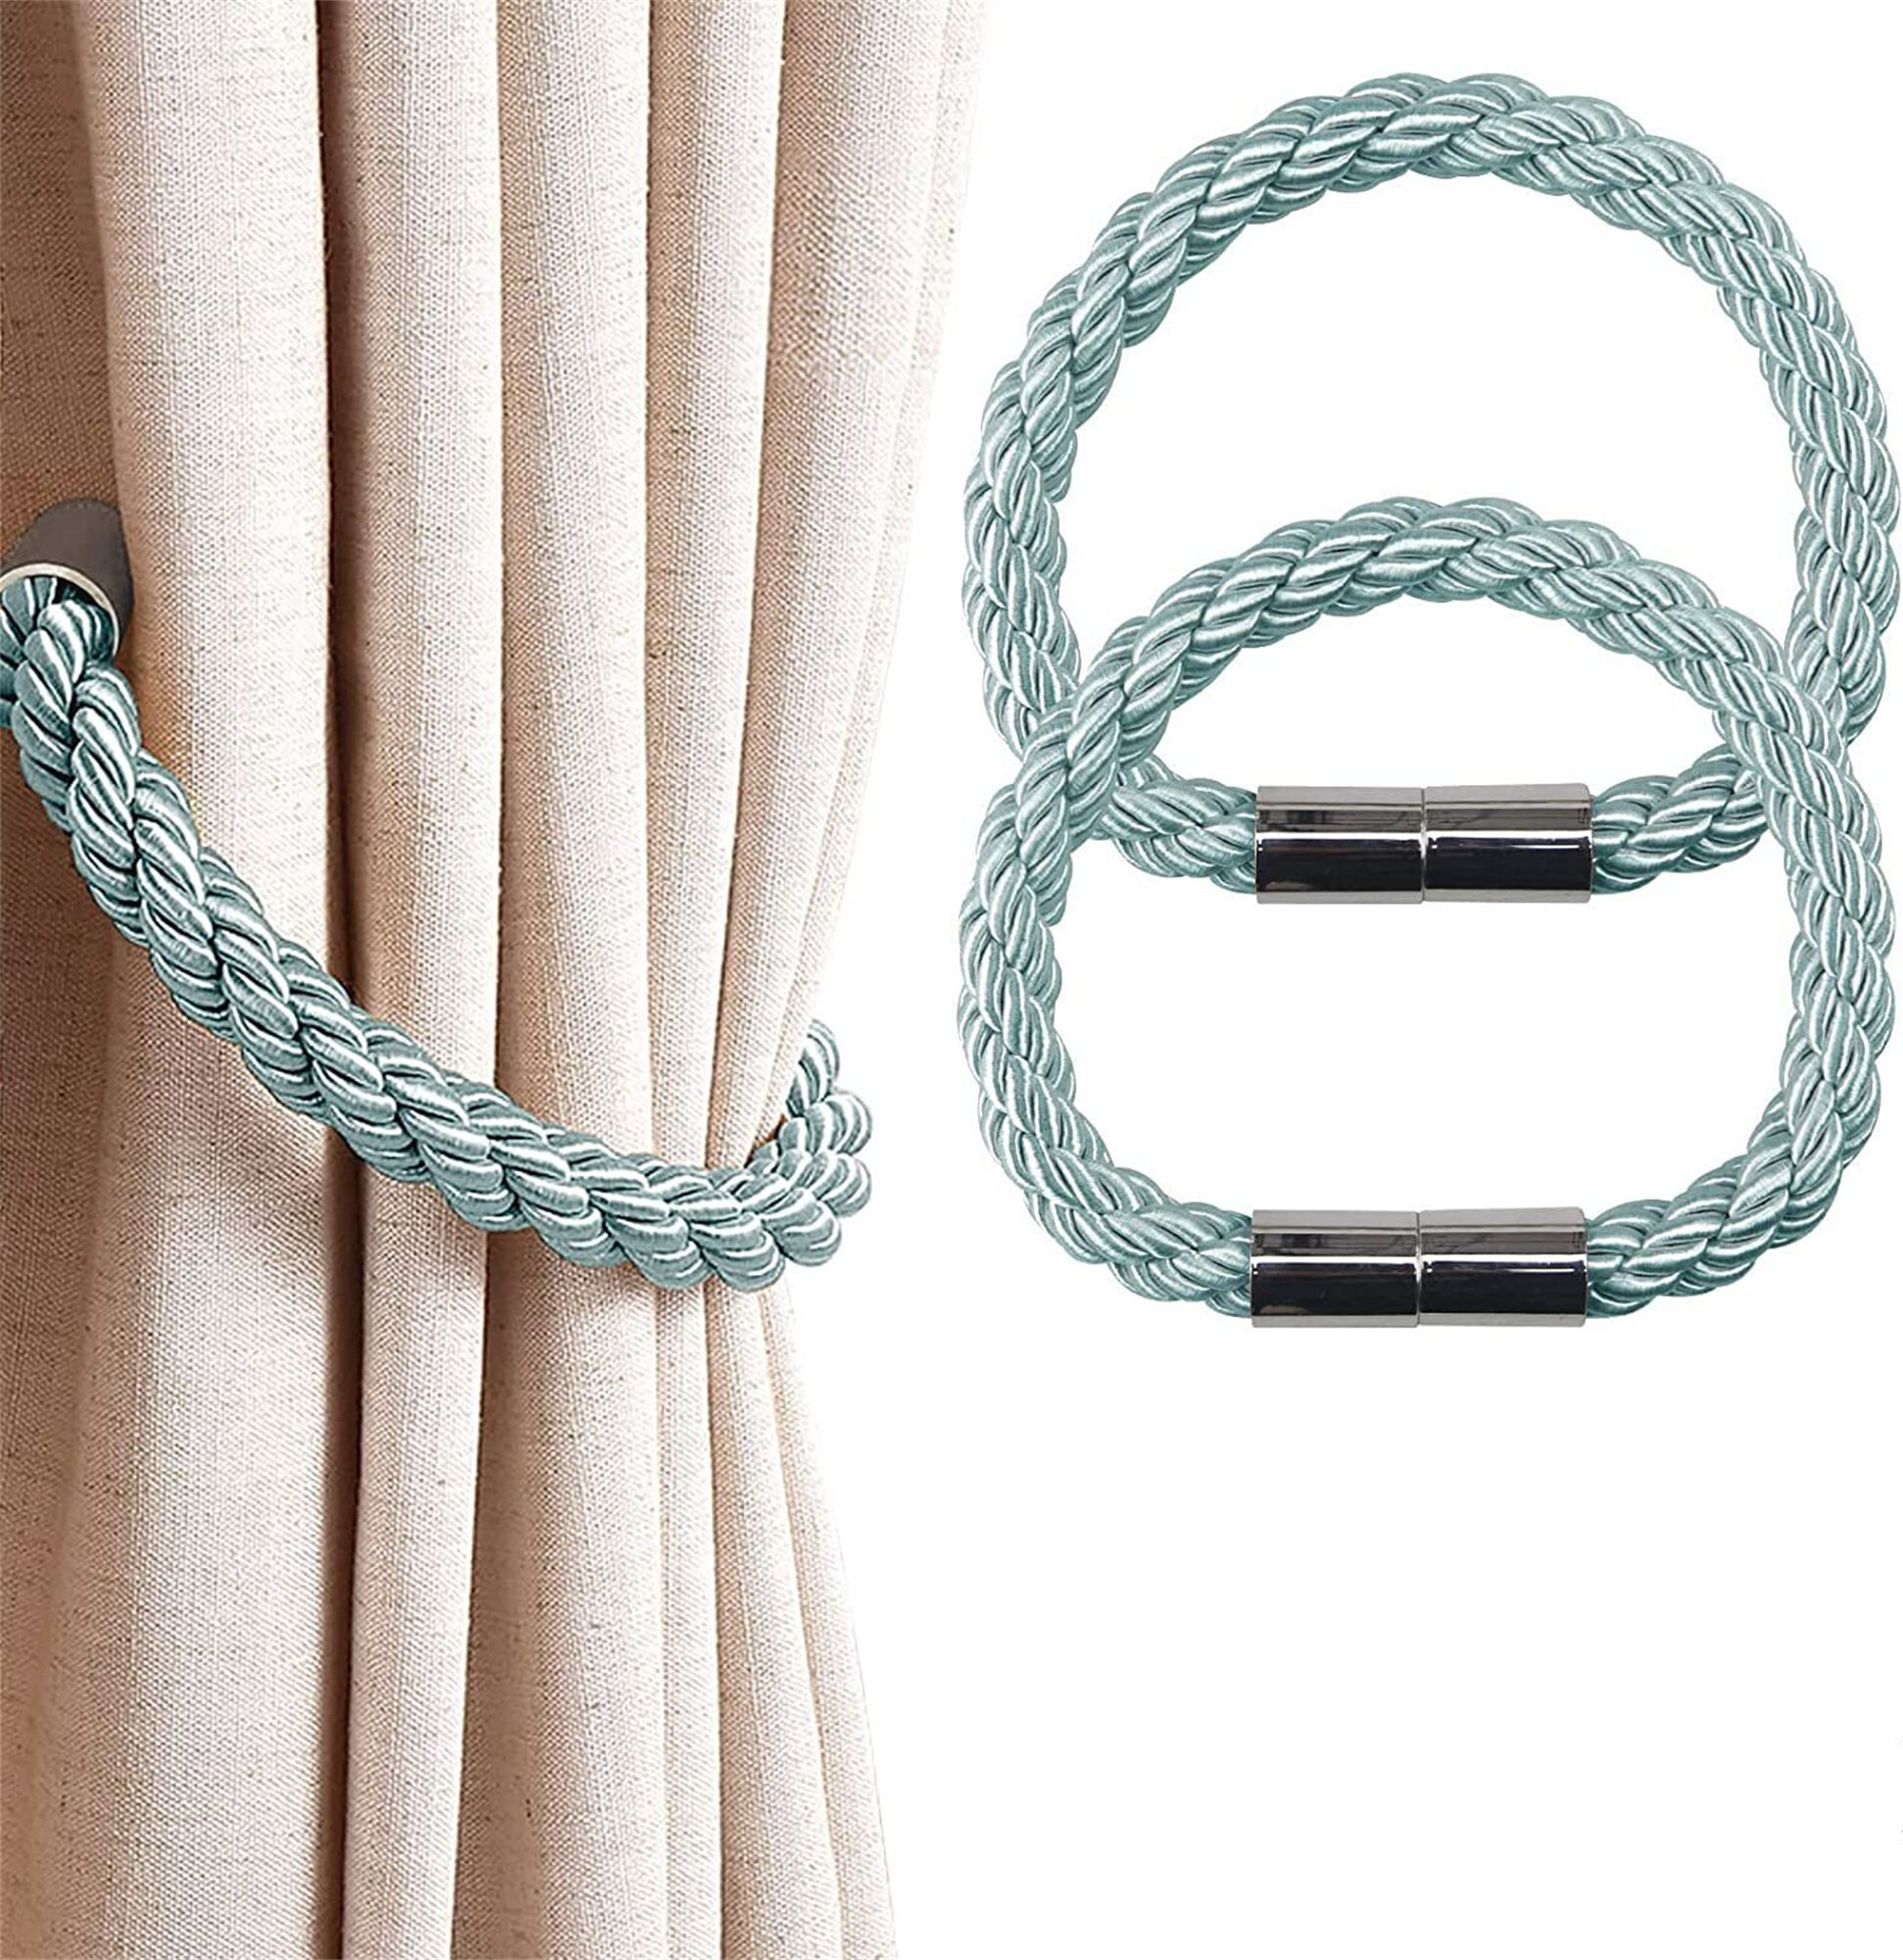 Magnetic Curtain Ball Hooks Rope Buckle Tie Backs Holdbacks Home Decorative New 